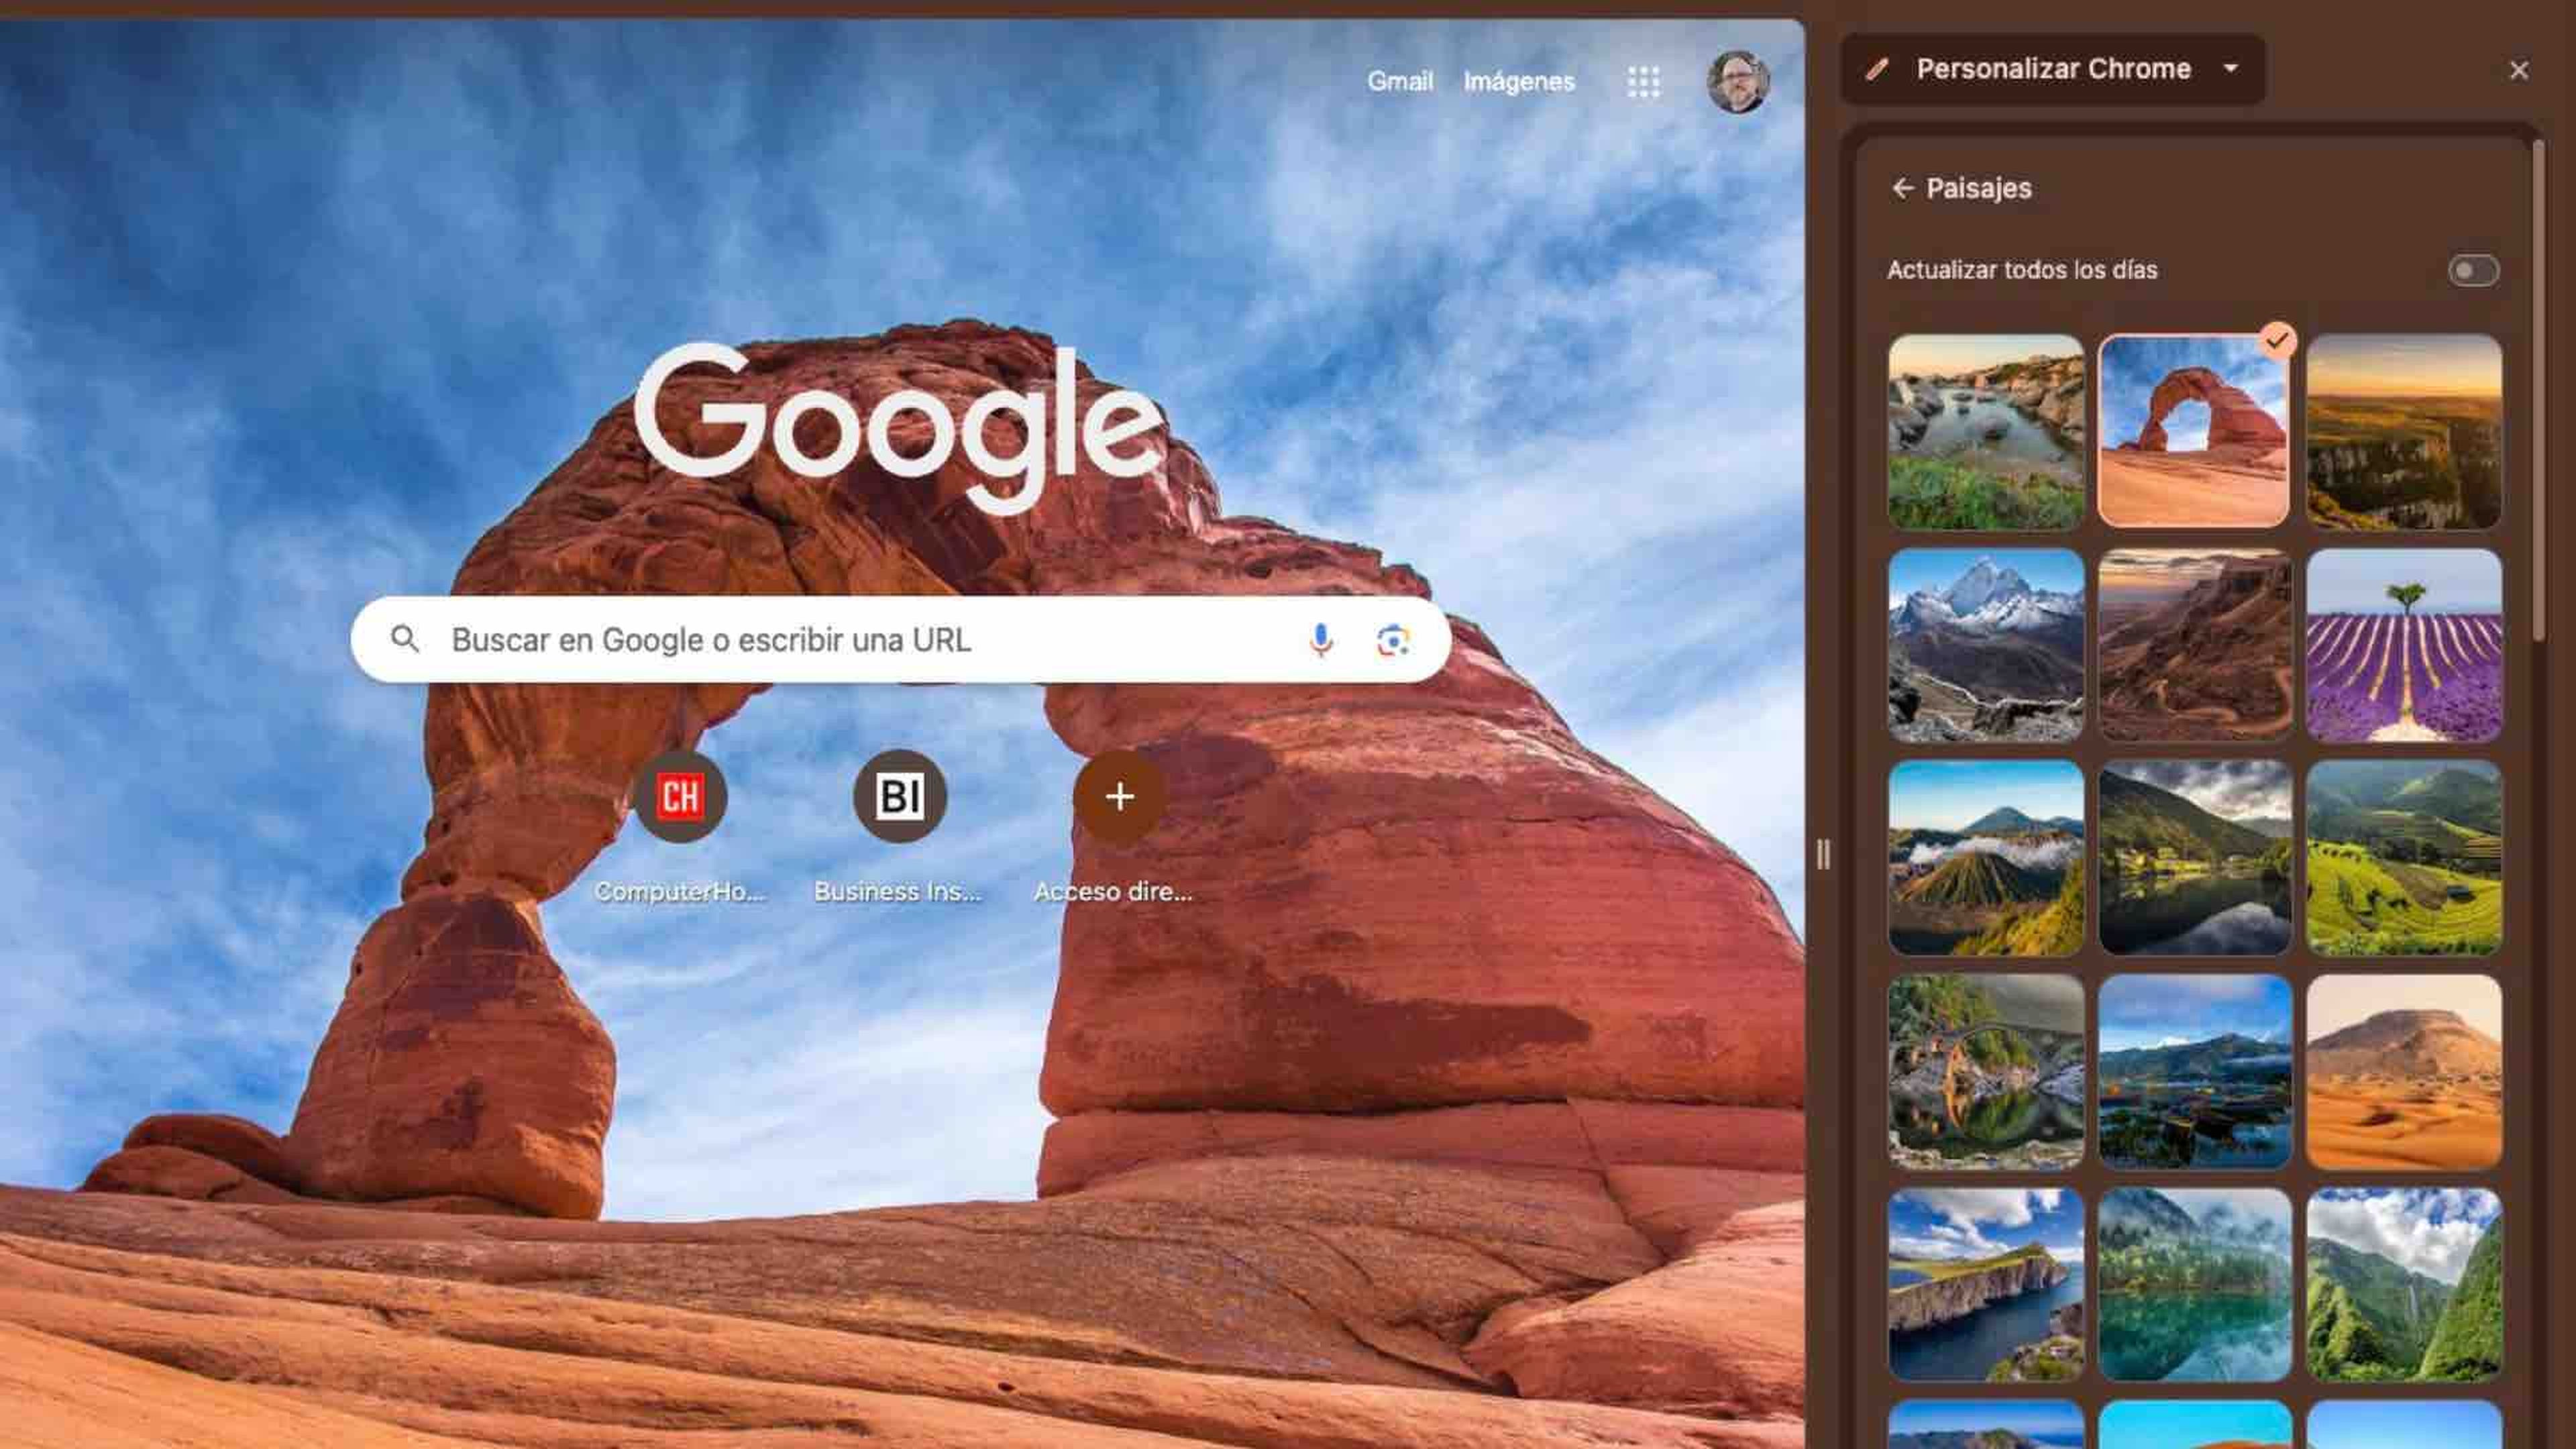 Cambiar el fondo de pantalla en Google Chrome